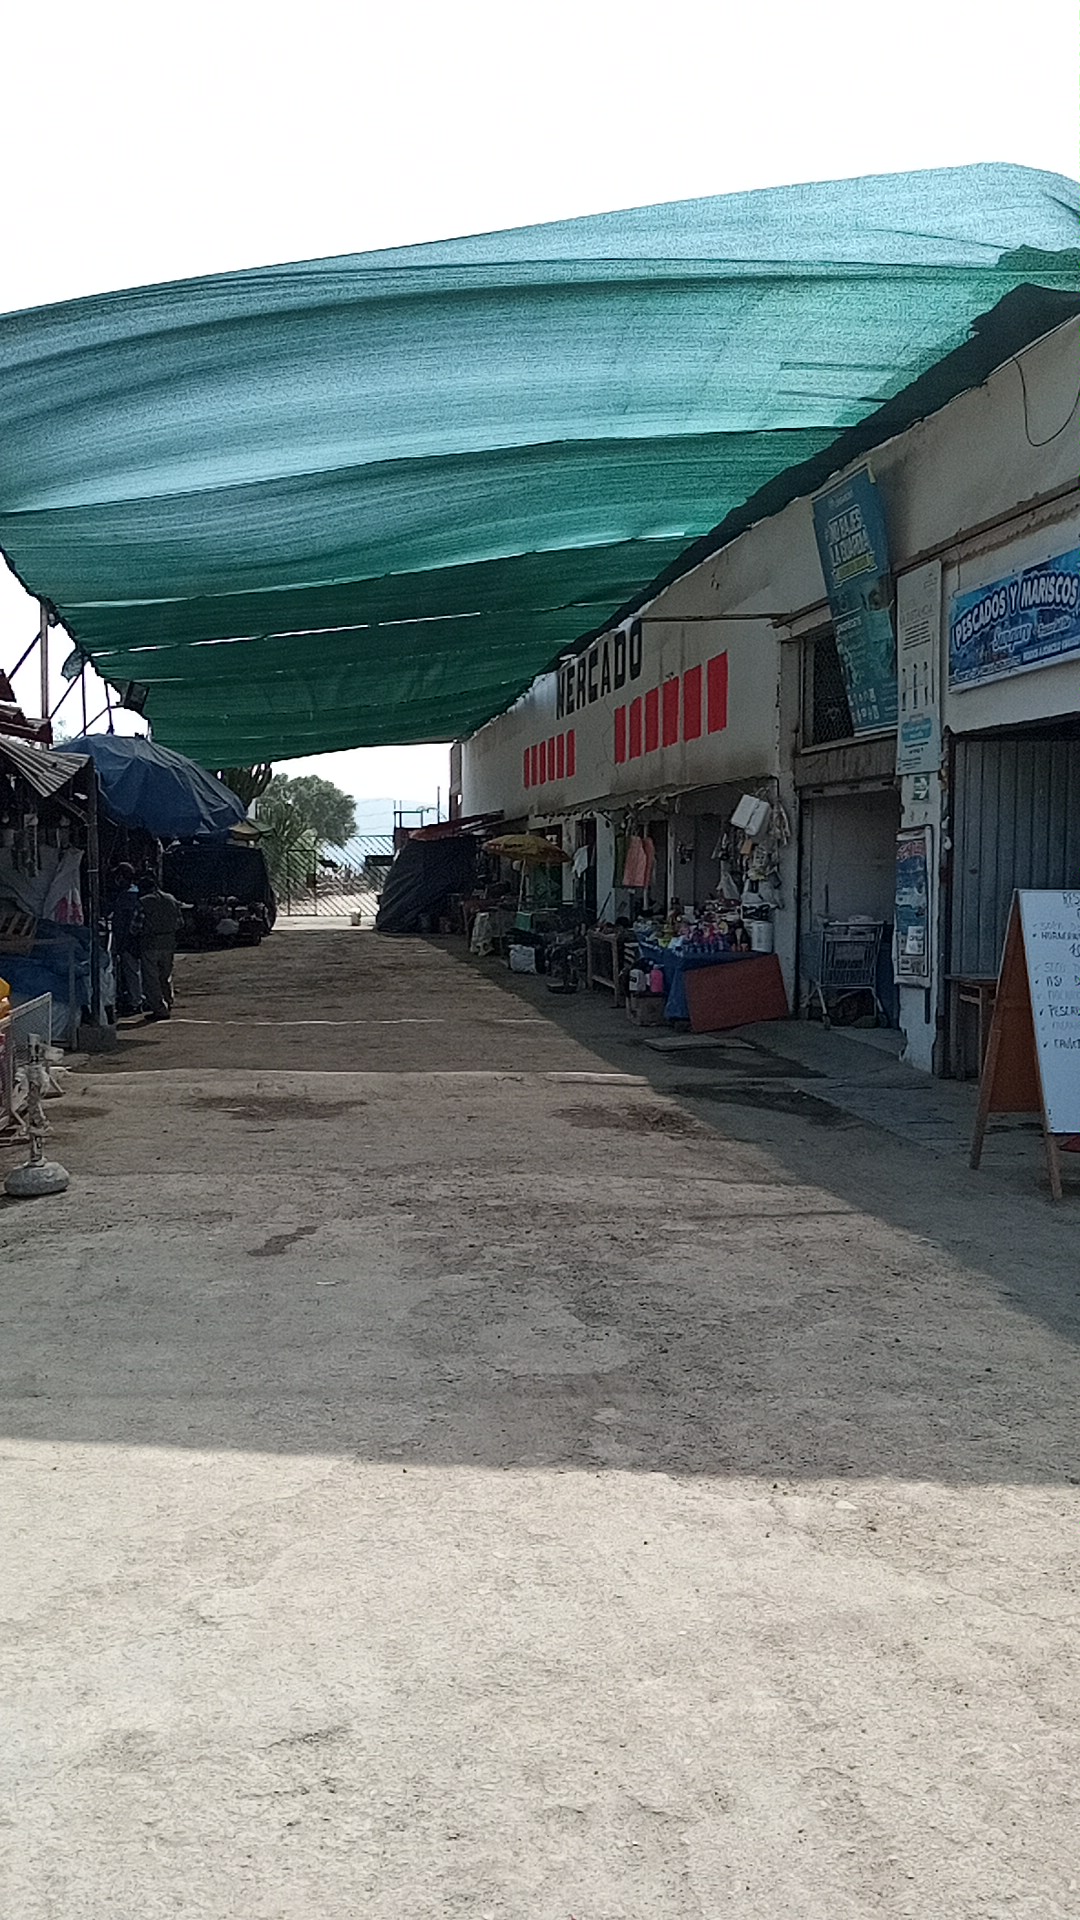 Chacra market